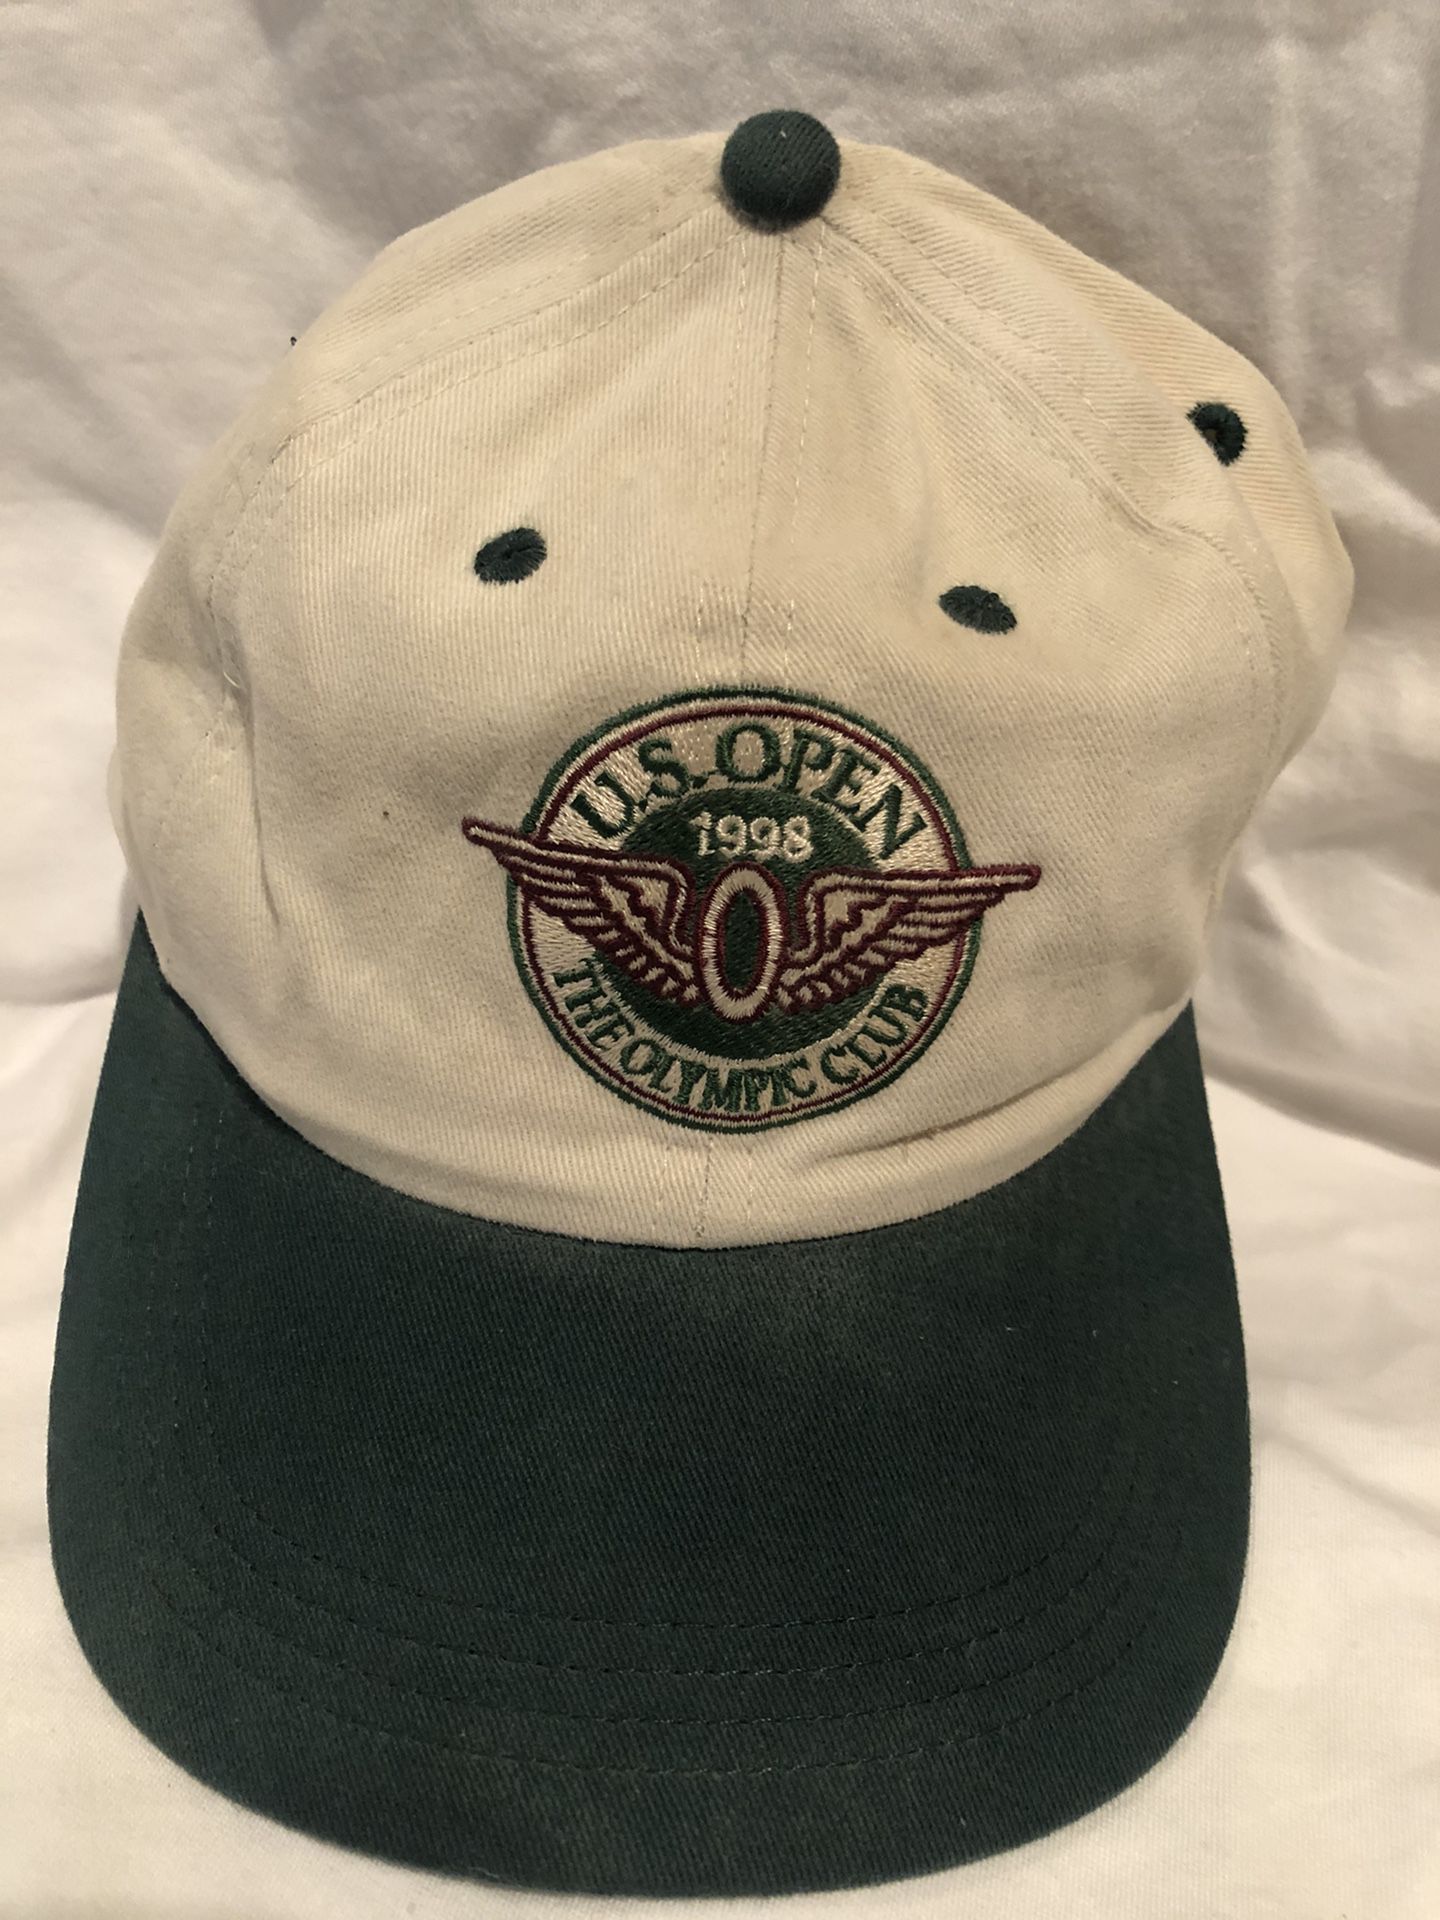 Vintage US Olympic Club golf cap